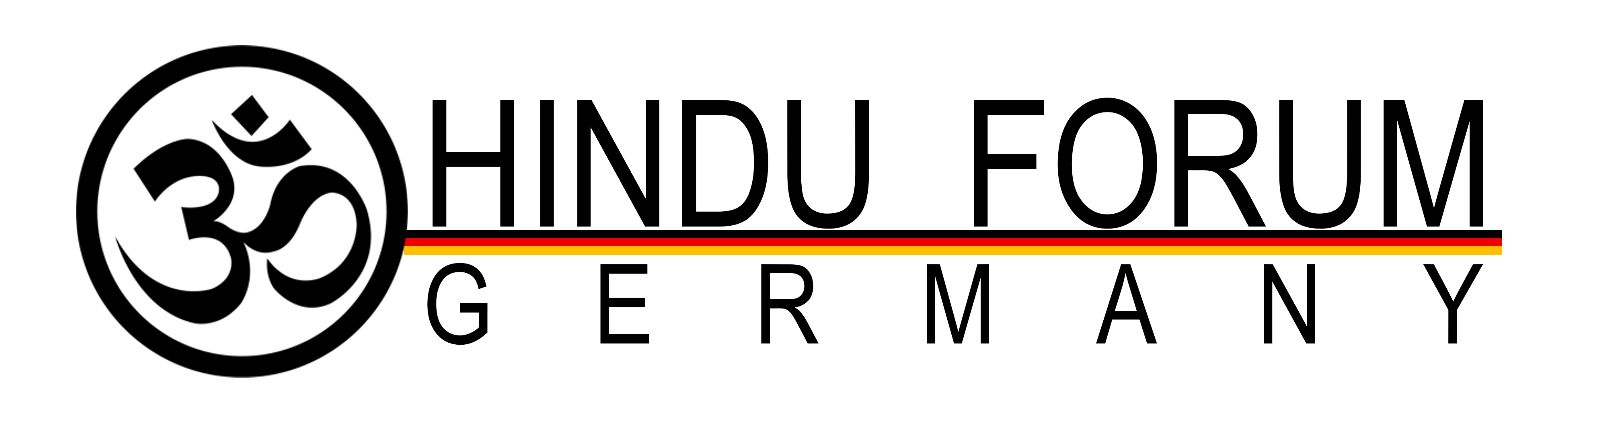 HINDU-FORUM